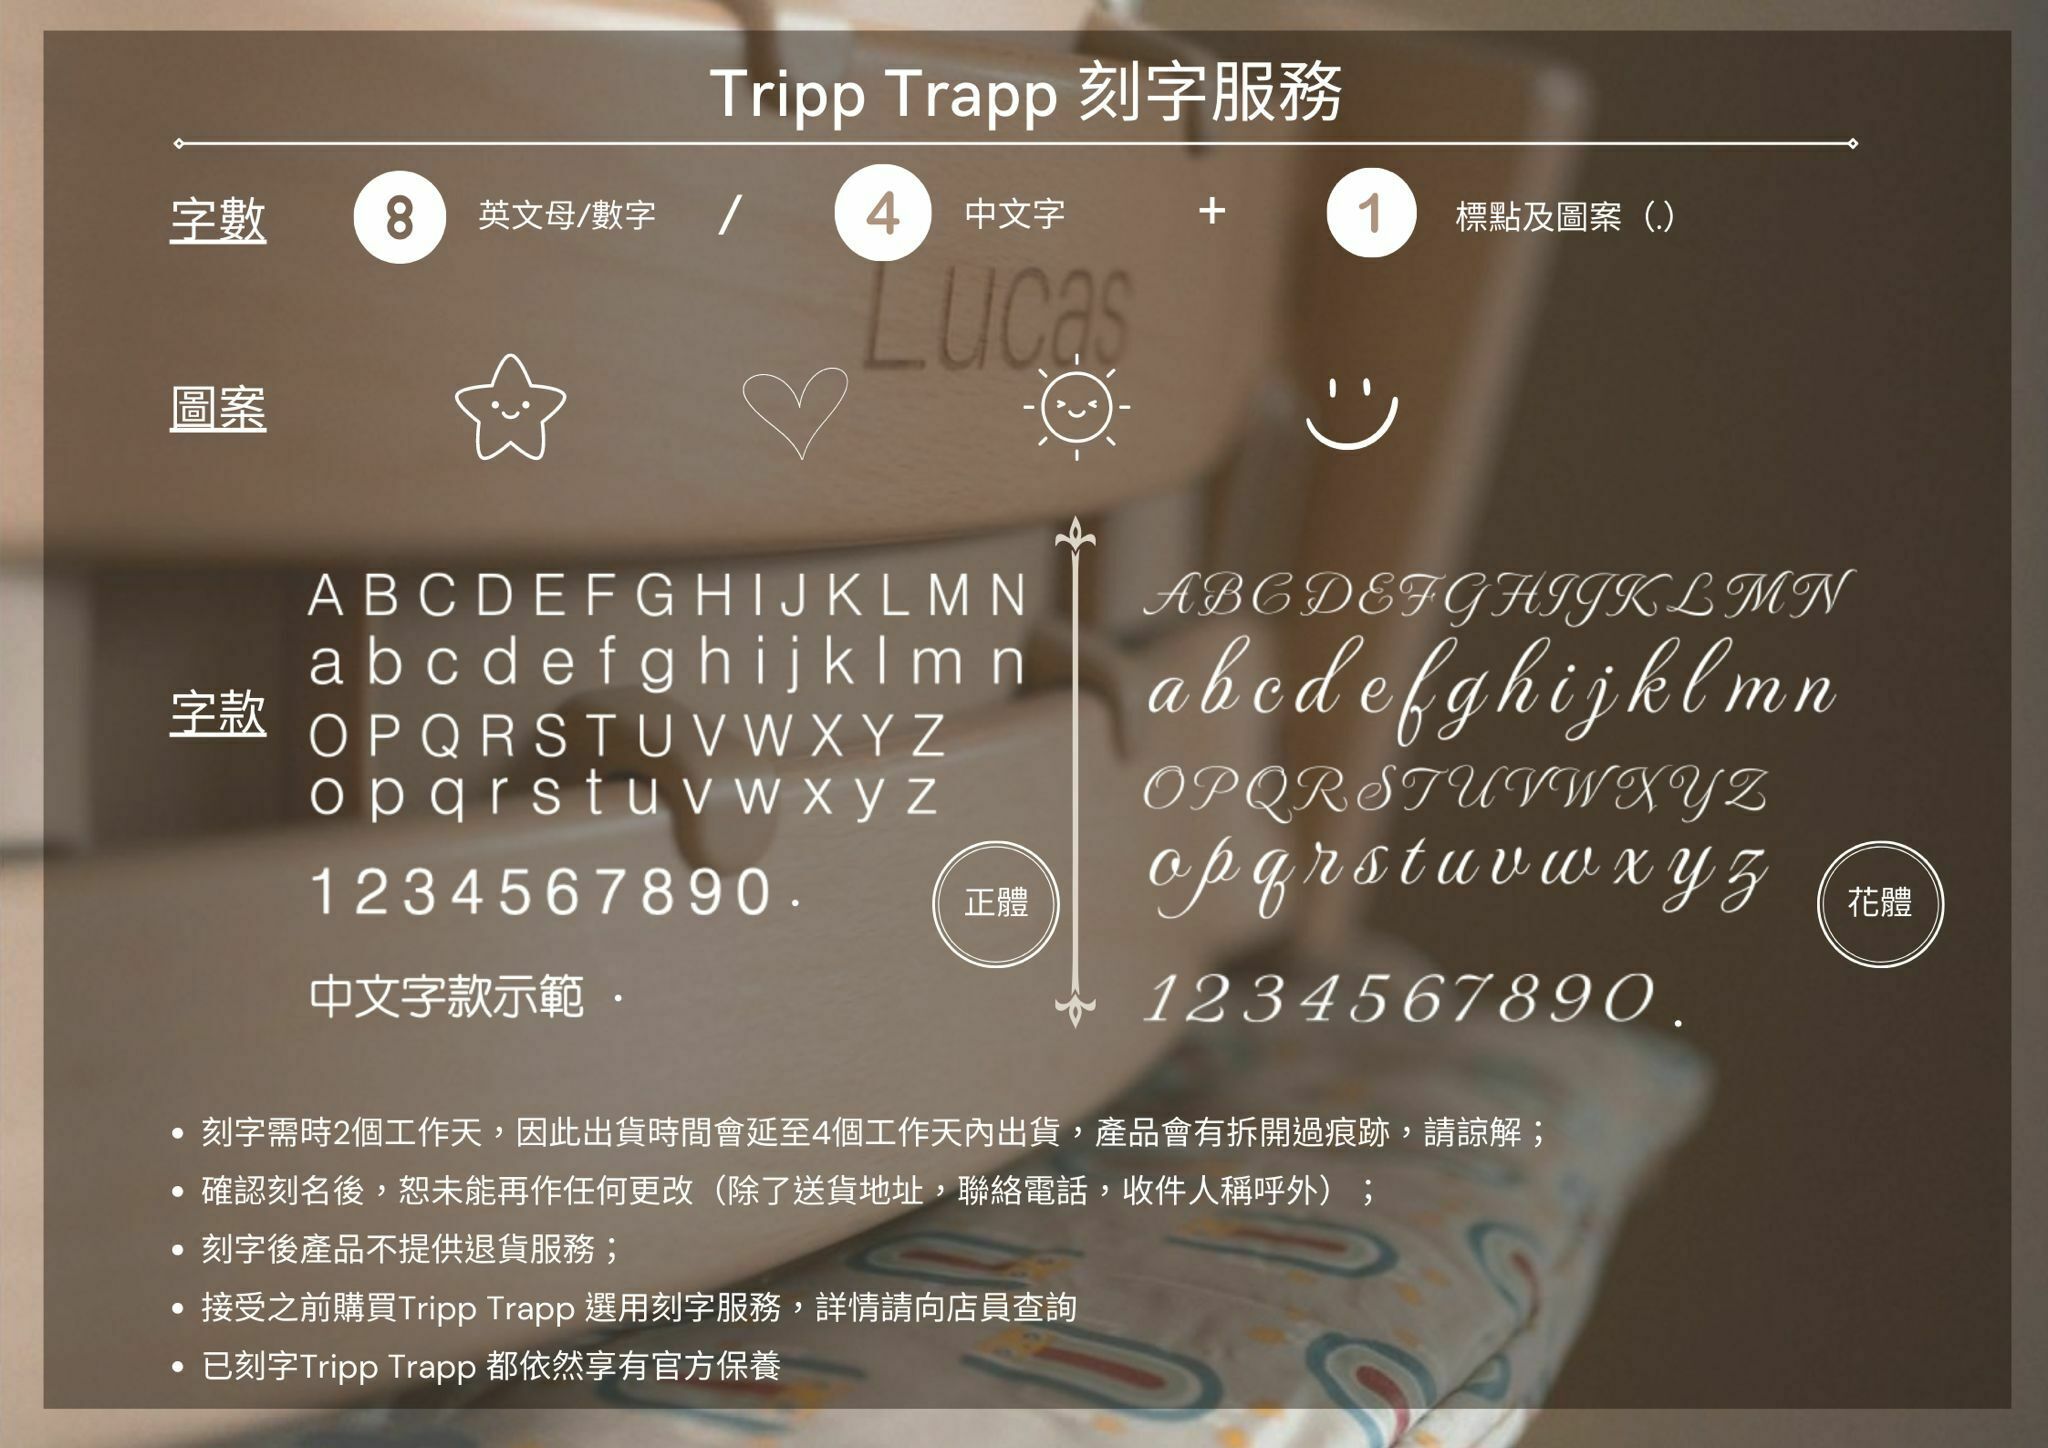 Tripp Trapp刻字-Tripp Trapp Engraving-Stokke Tripp Trapp